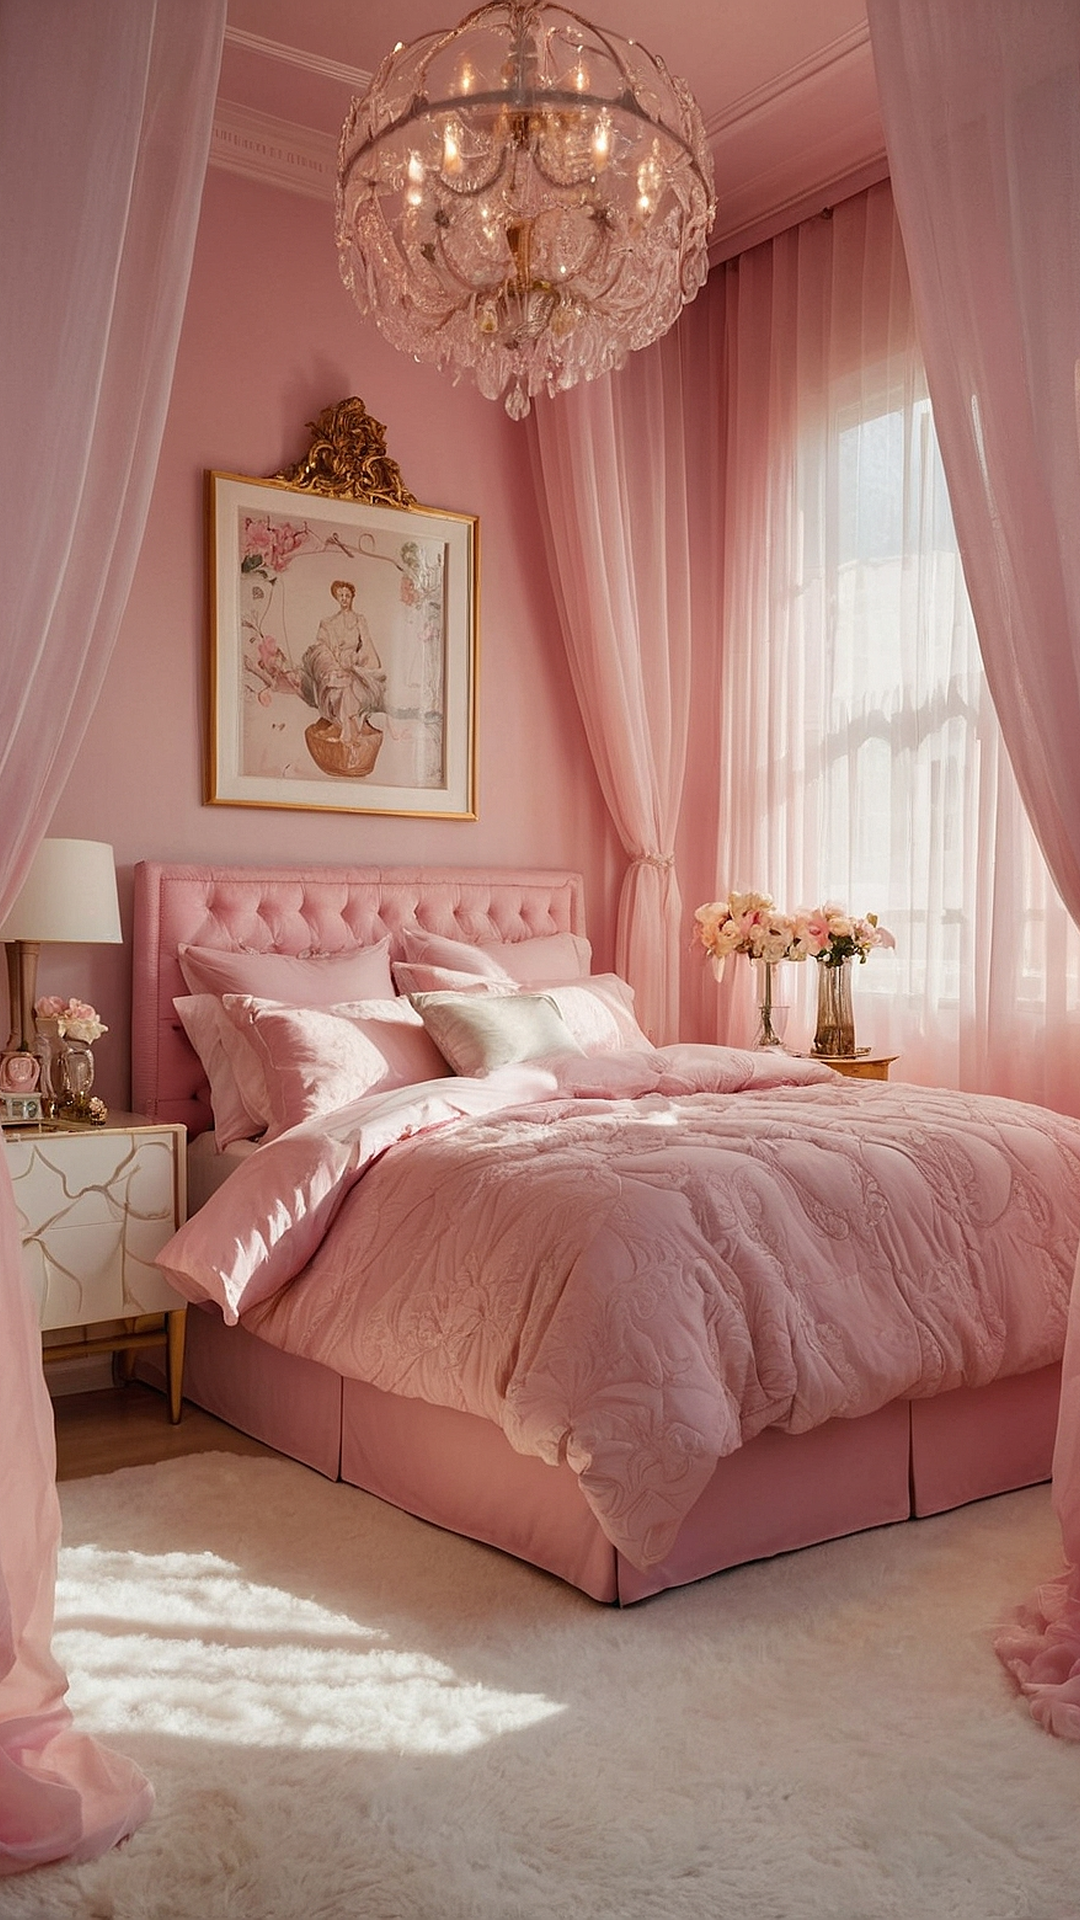 Dusty Rose Dreams: Stylish Bedroom Updates